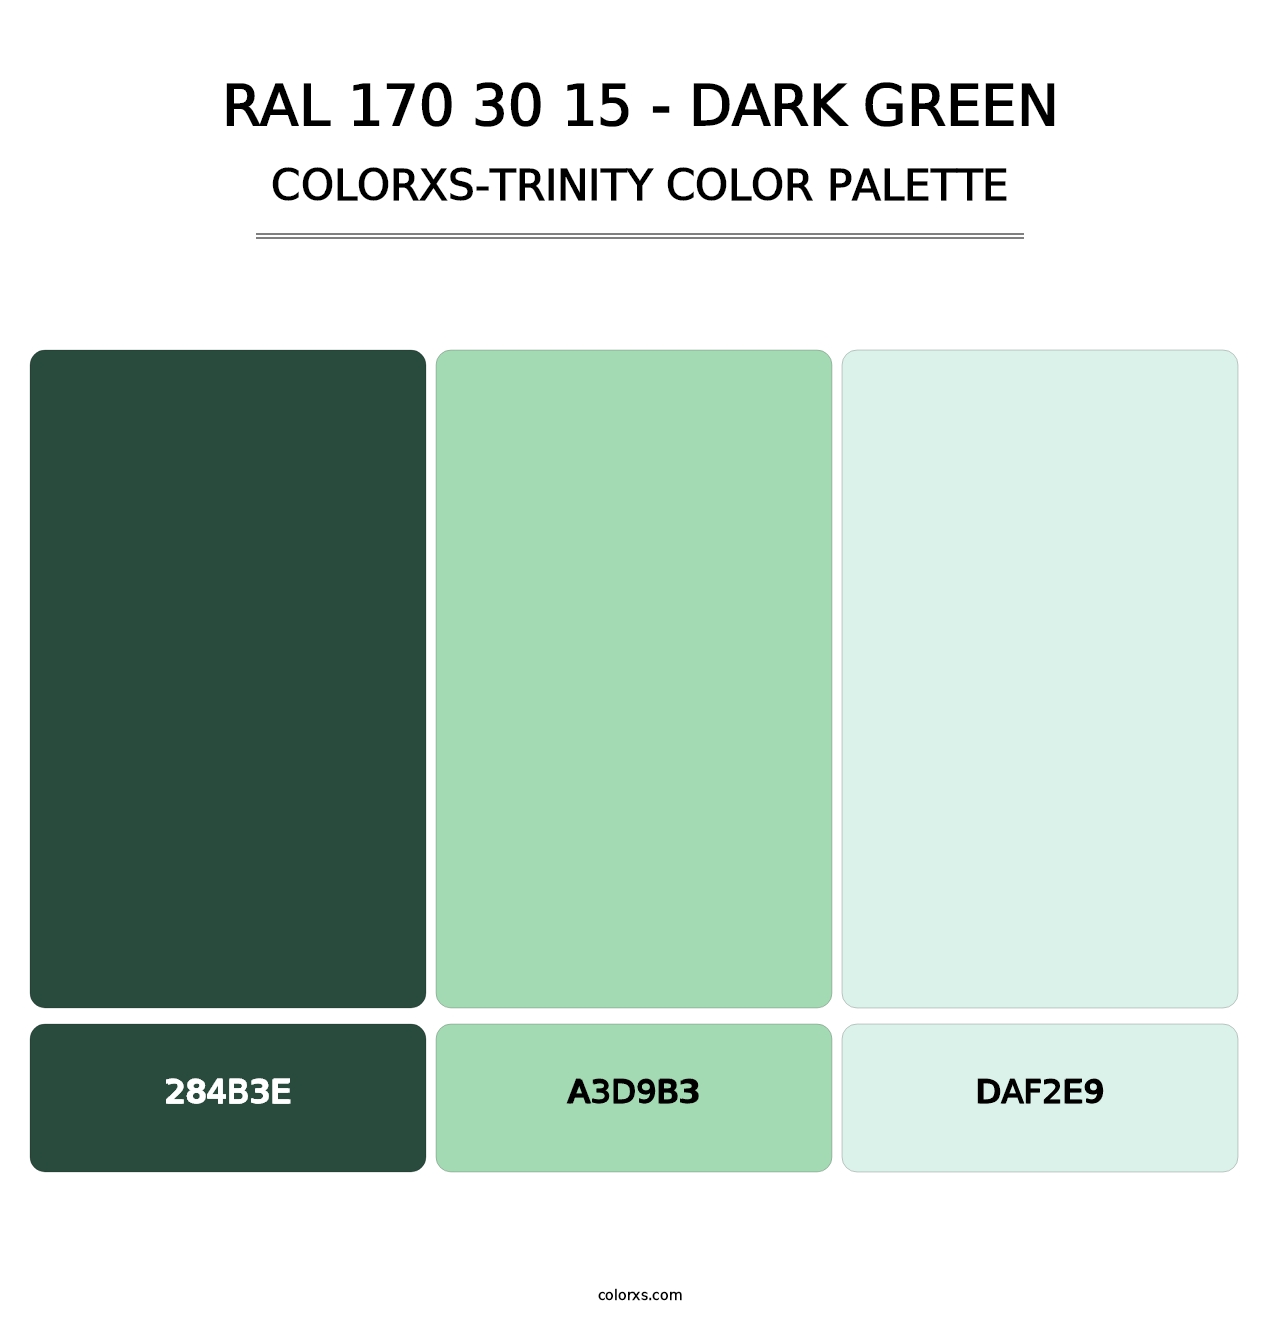 RAL 170 30 15 - Dark Green - Colorxs Trinity Palette